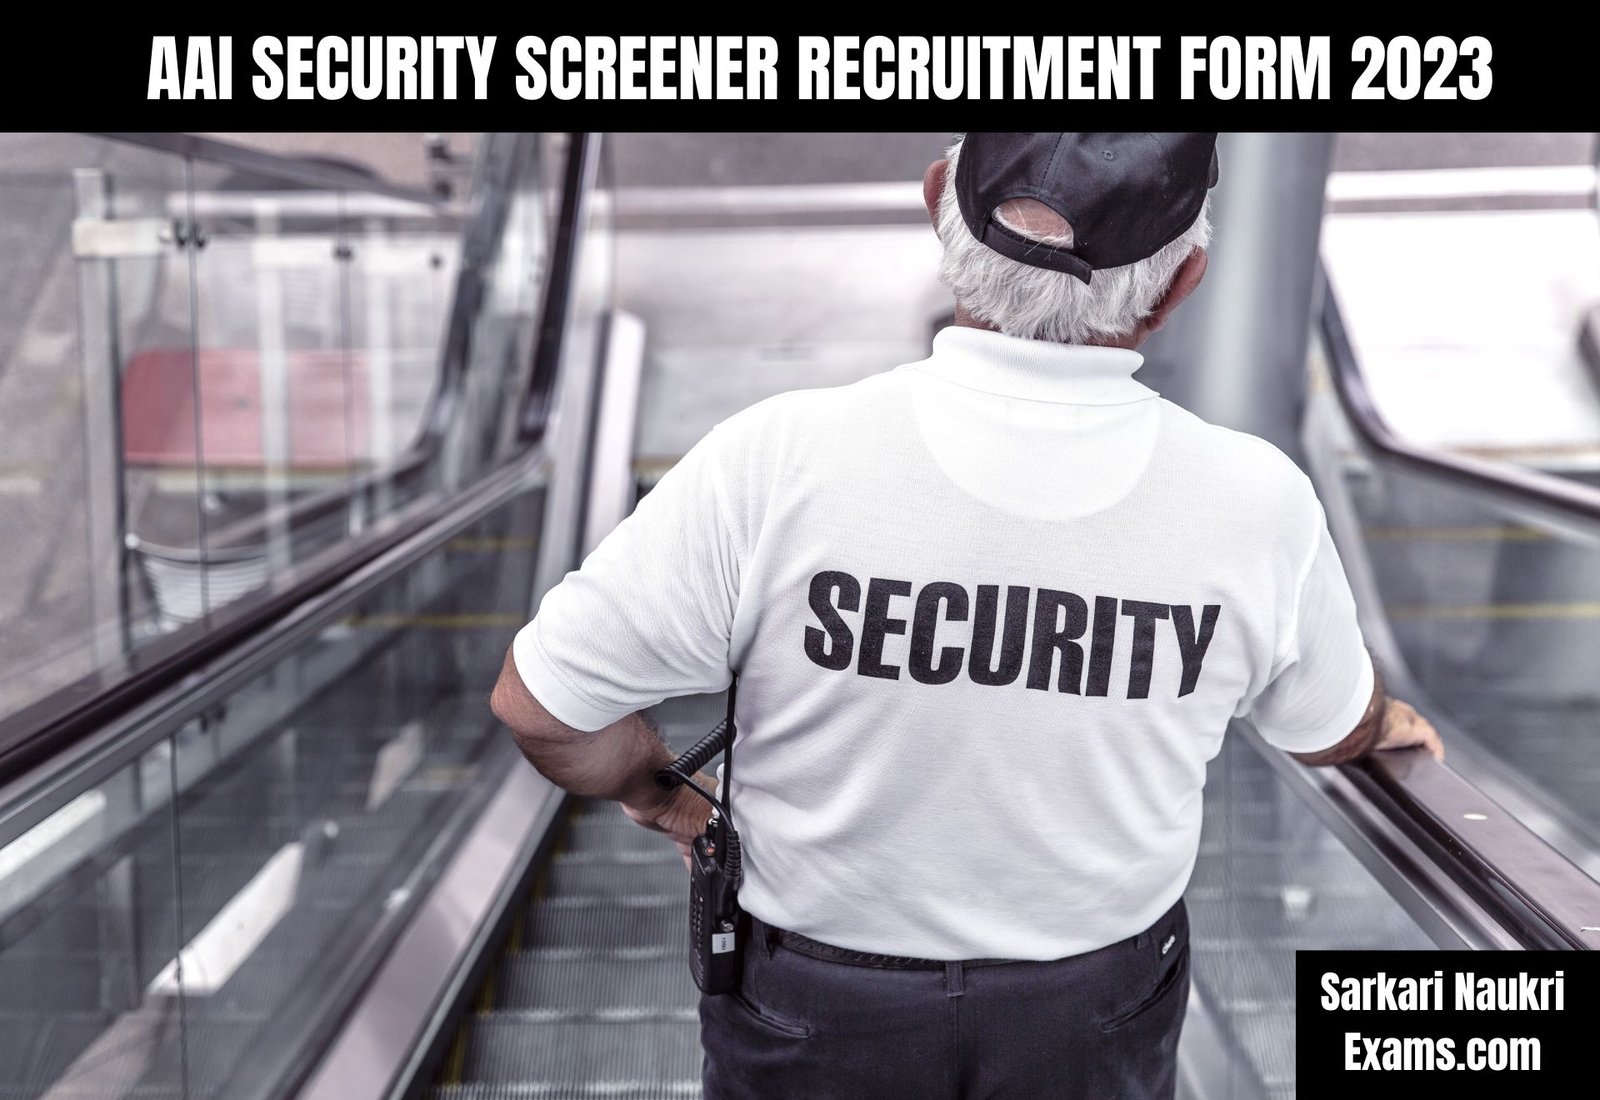 AAICLAS Security Screener Recruitment Form 2023 | Last Date 14 January 2023 | Interview Based Job